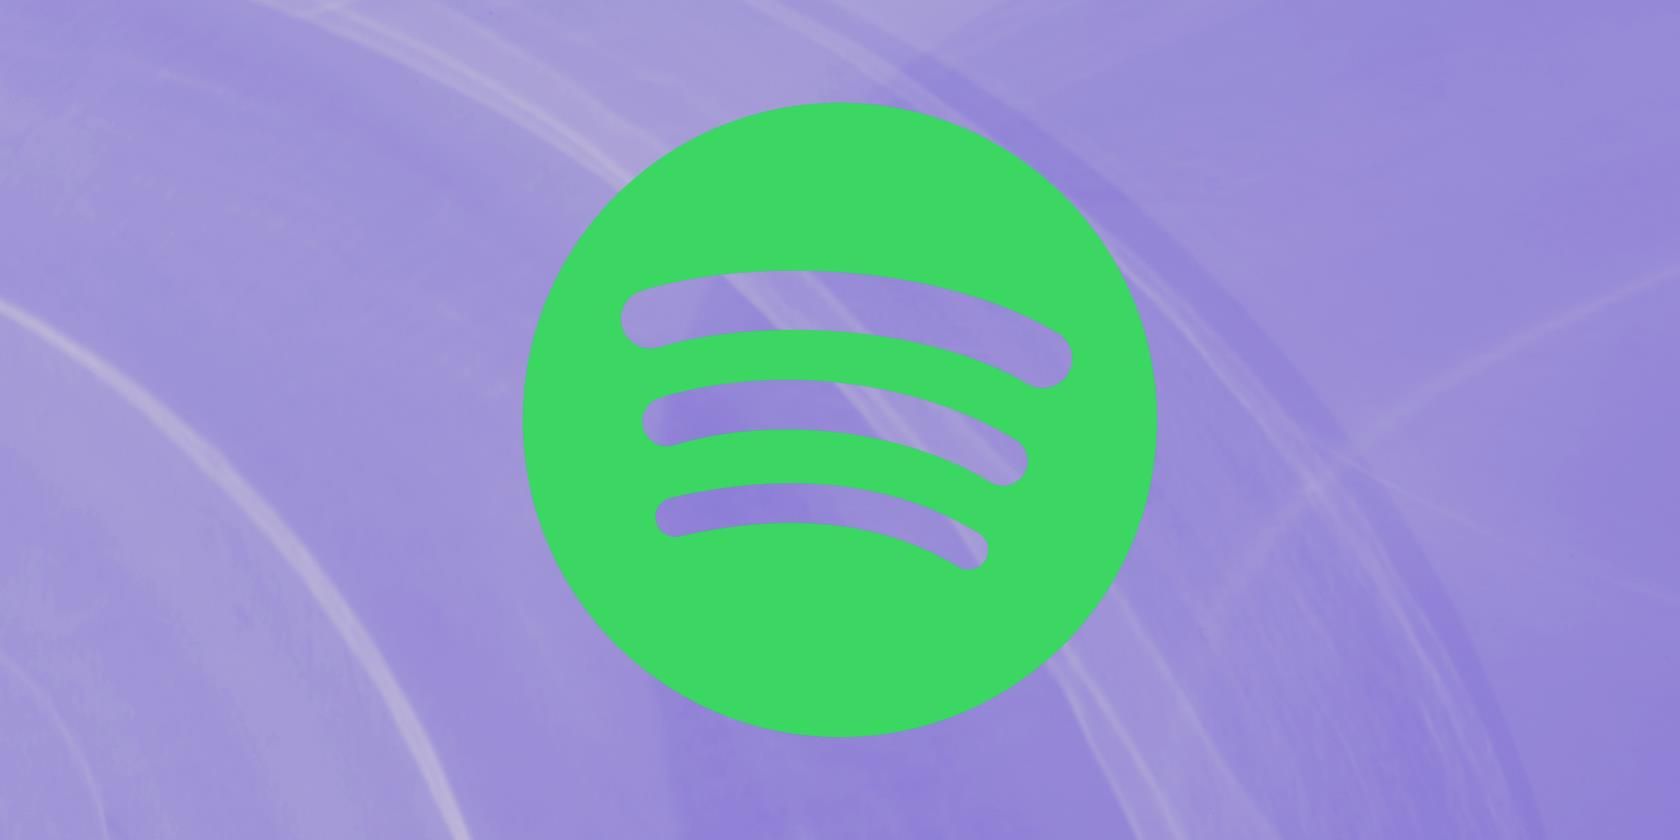 Spotify logo on colorful background